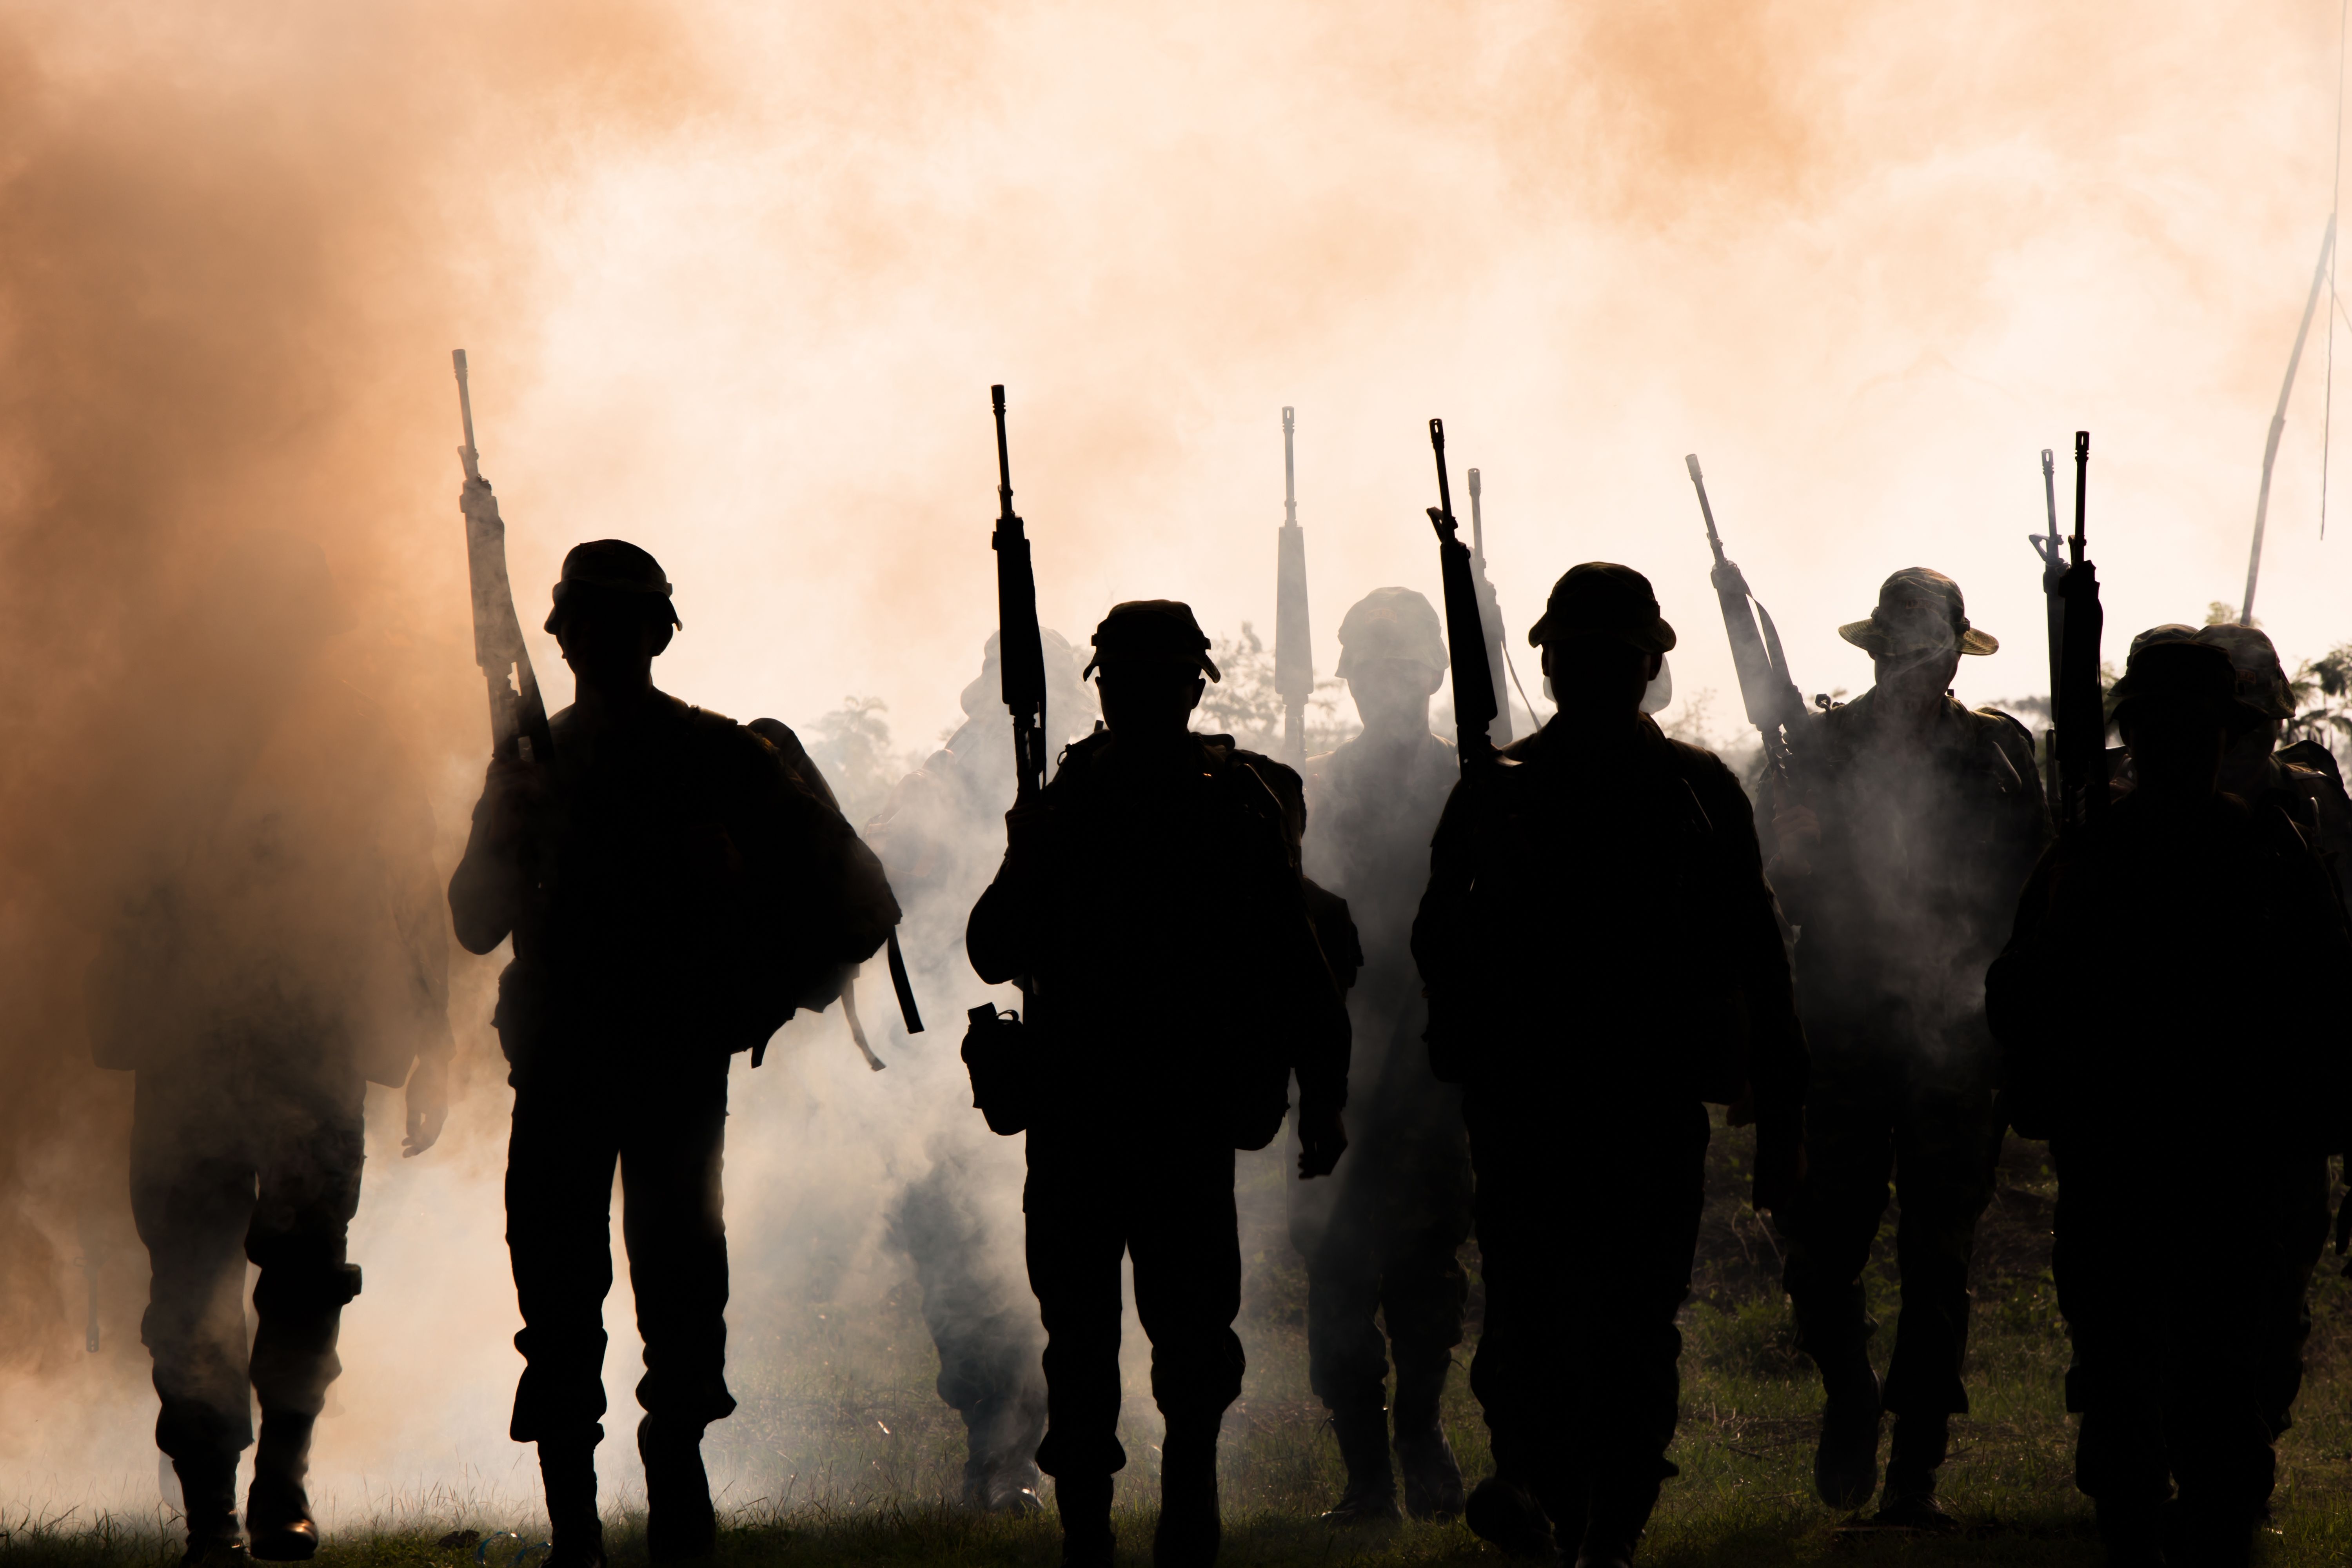 silhouette-of-soldiers-with-rifles-walk-through-sm-2023-11-27-05-24-22-utc.jpg